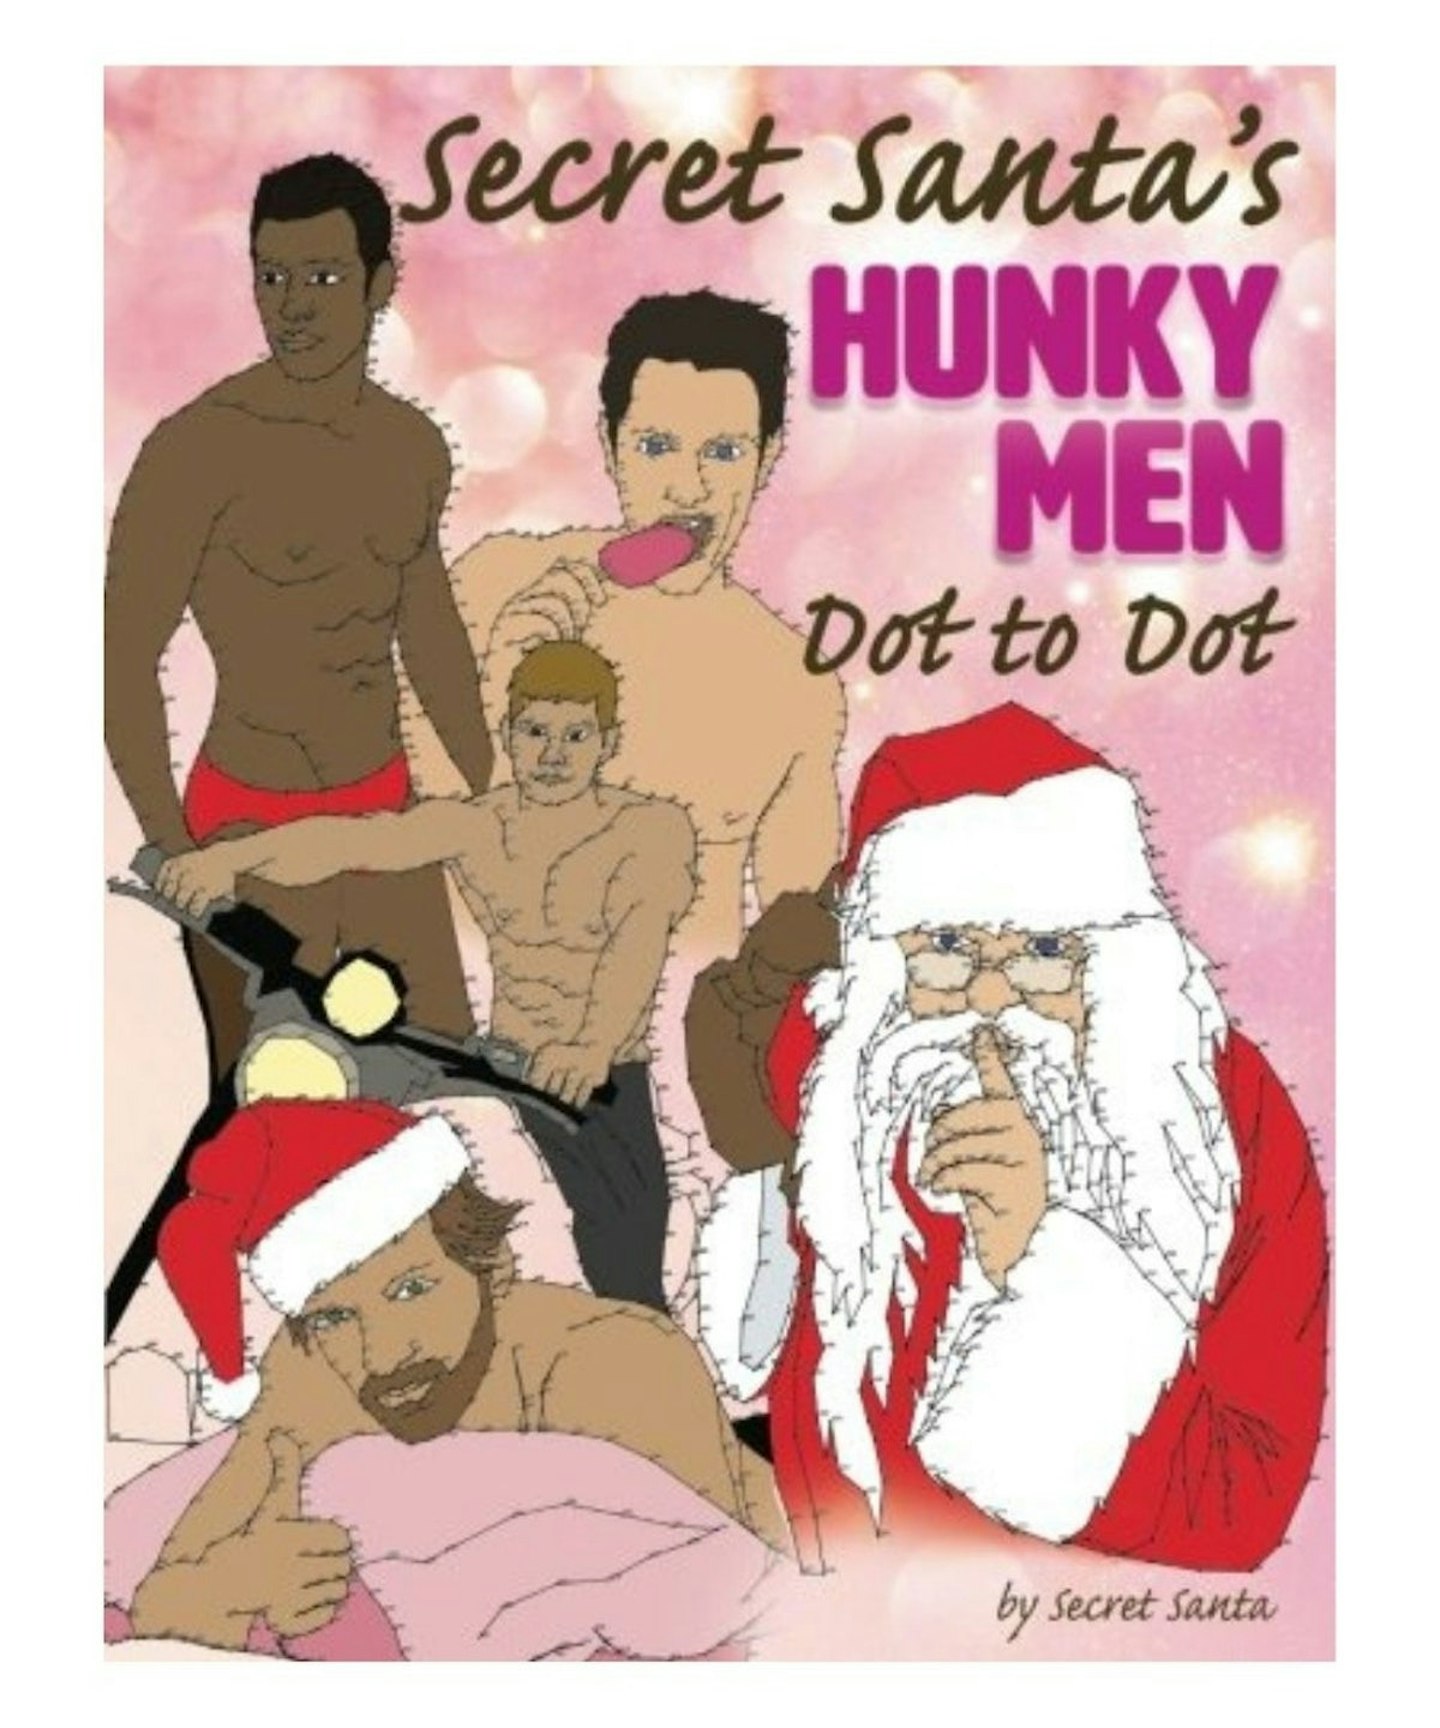 Secret Santa's Hunky Men Dot to Dot